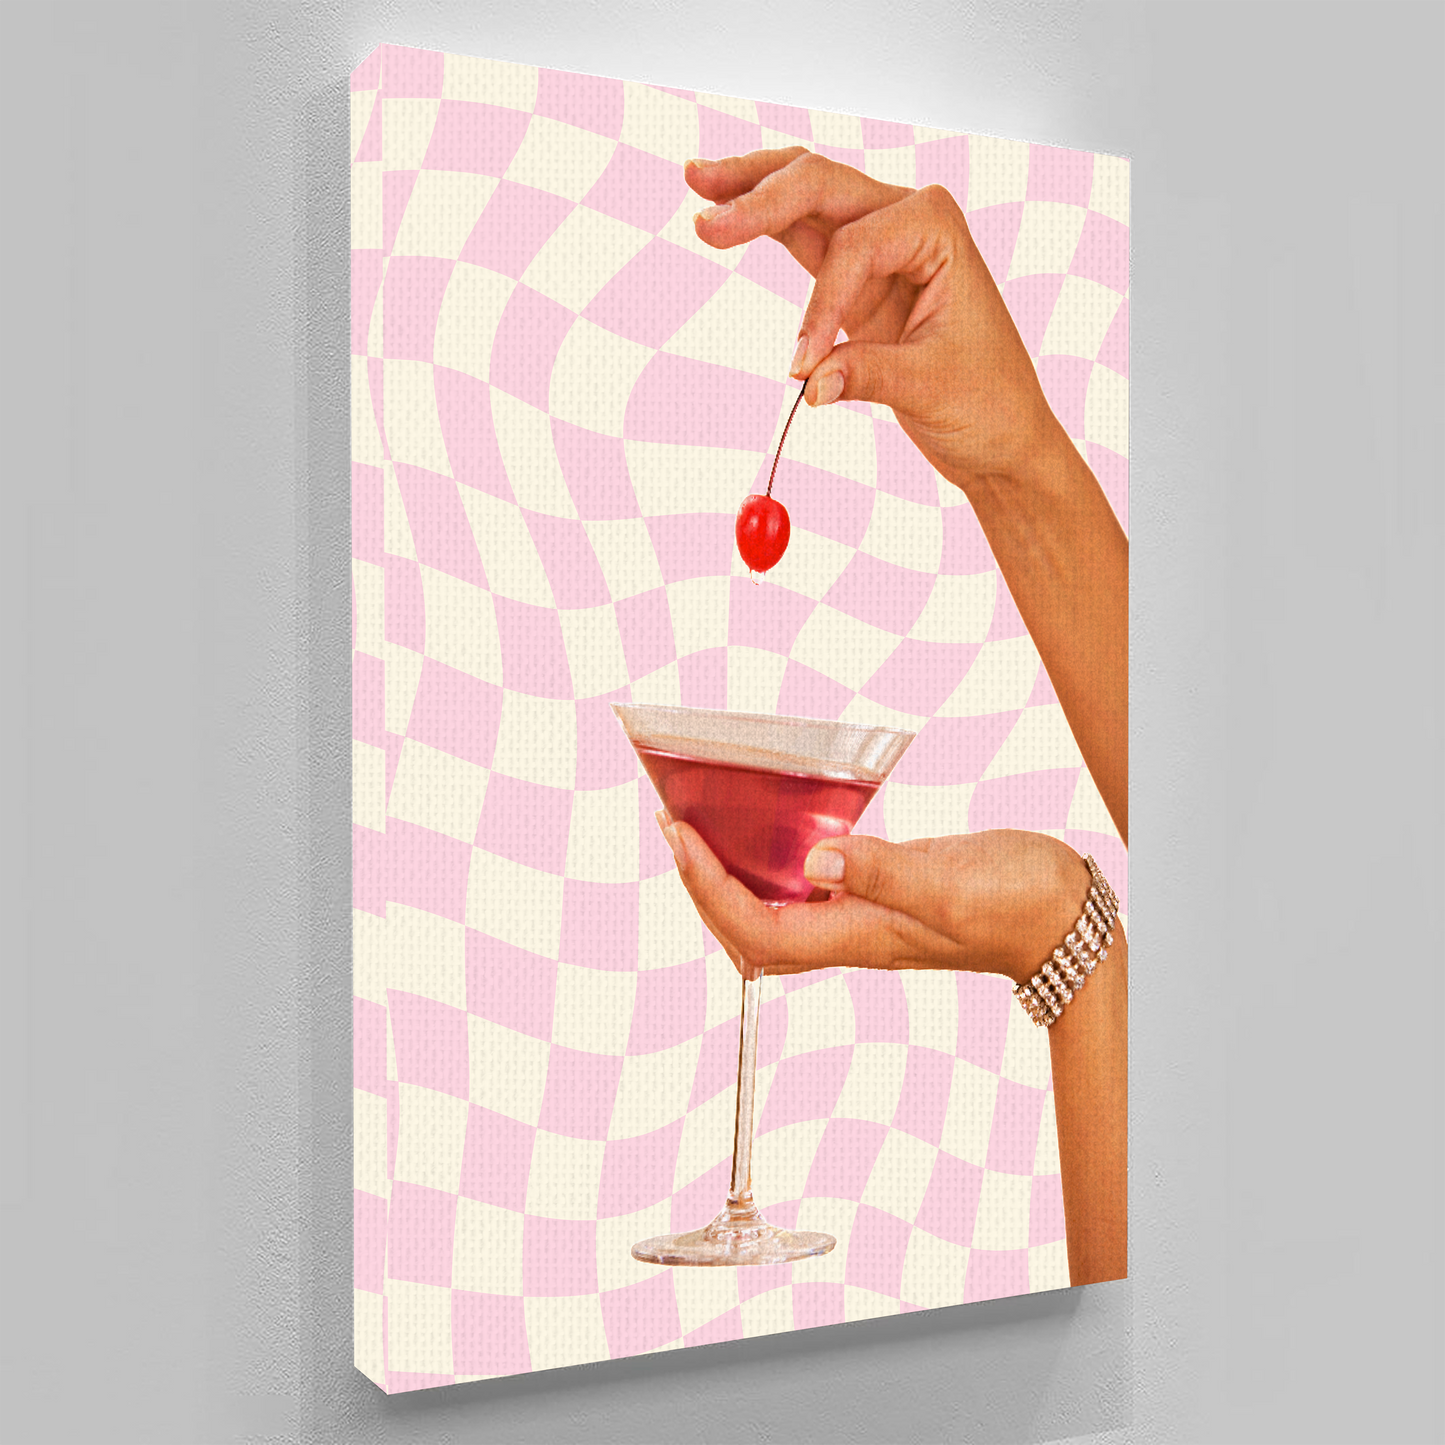 Cherry Cocktail